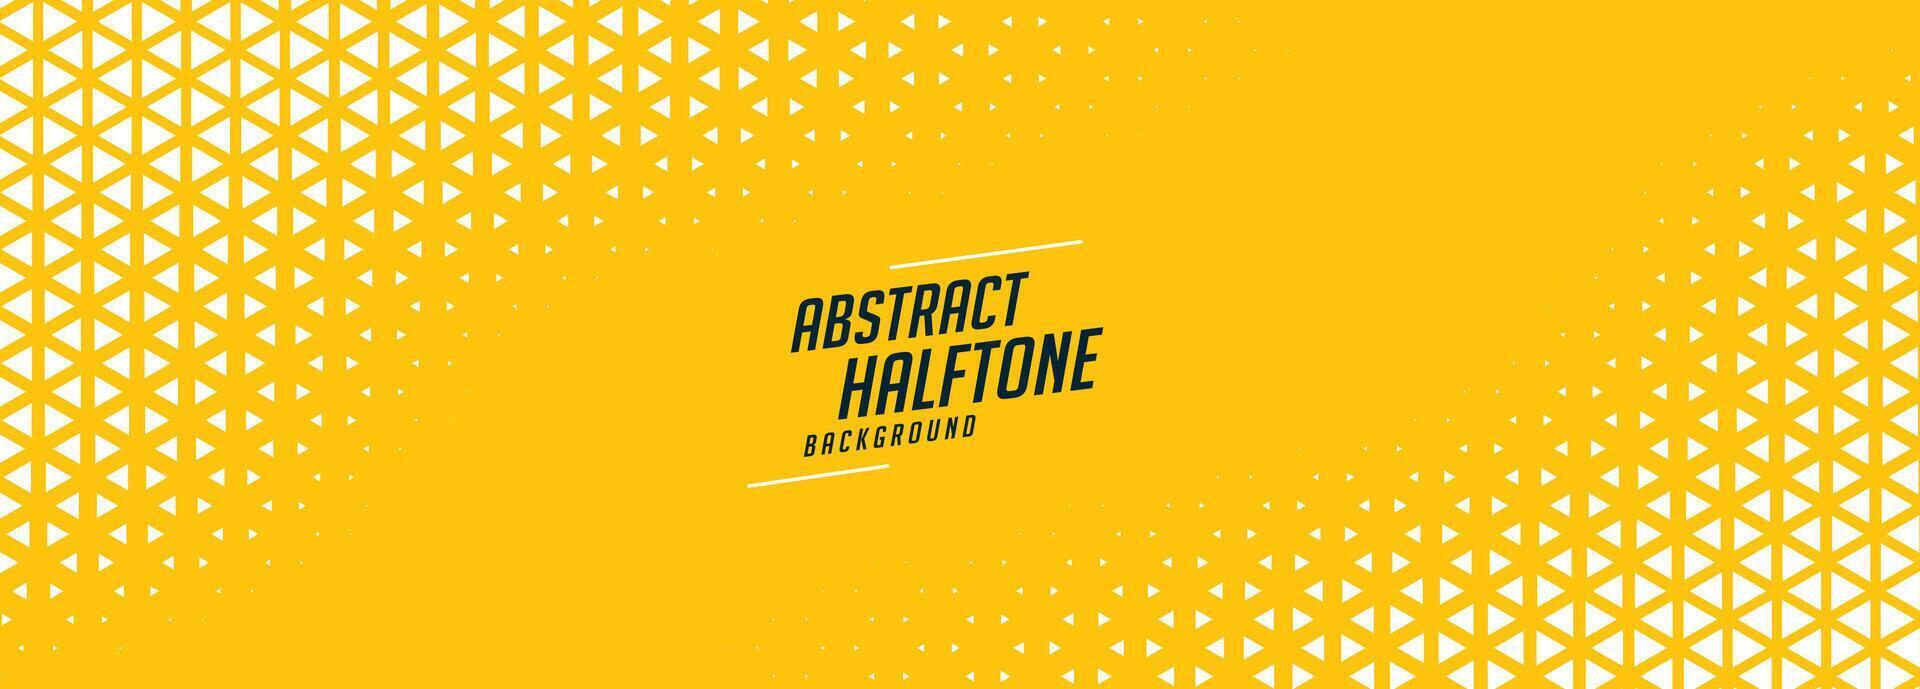 abstract halftone yellow banner design vector